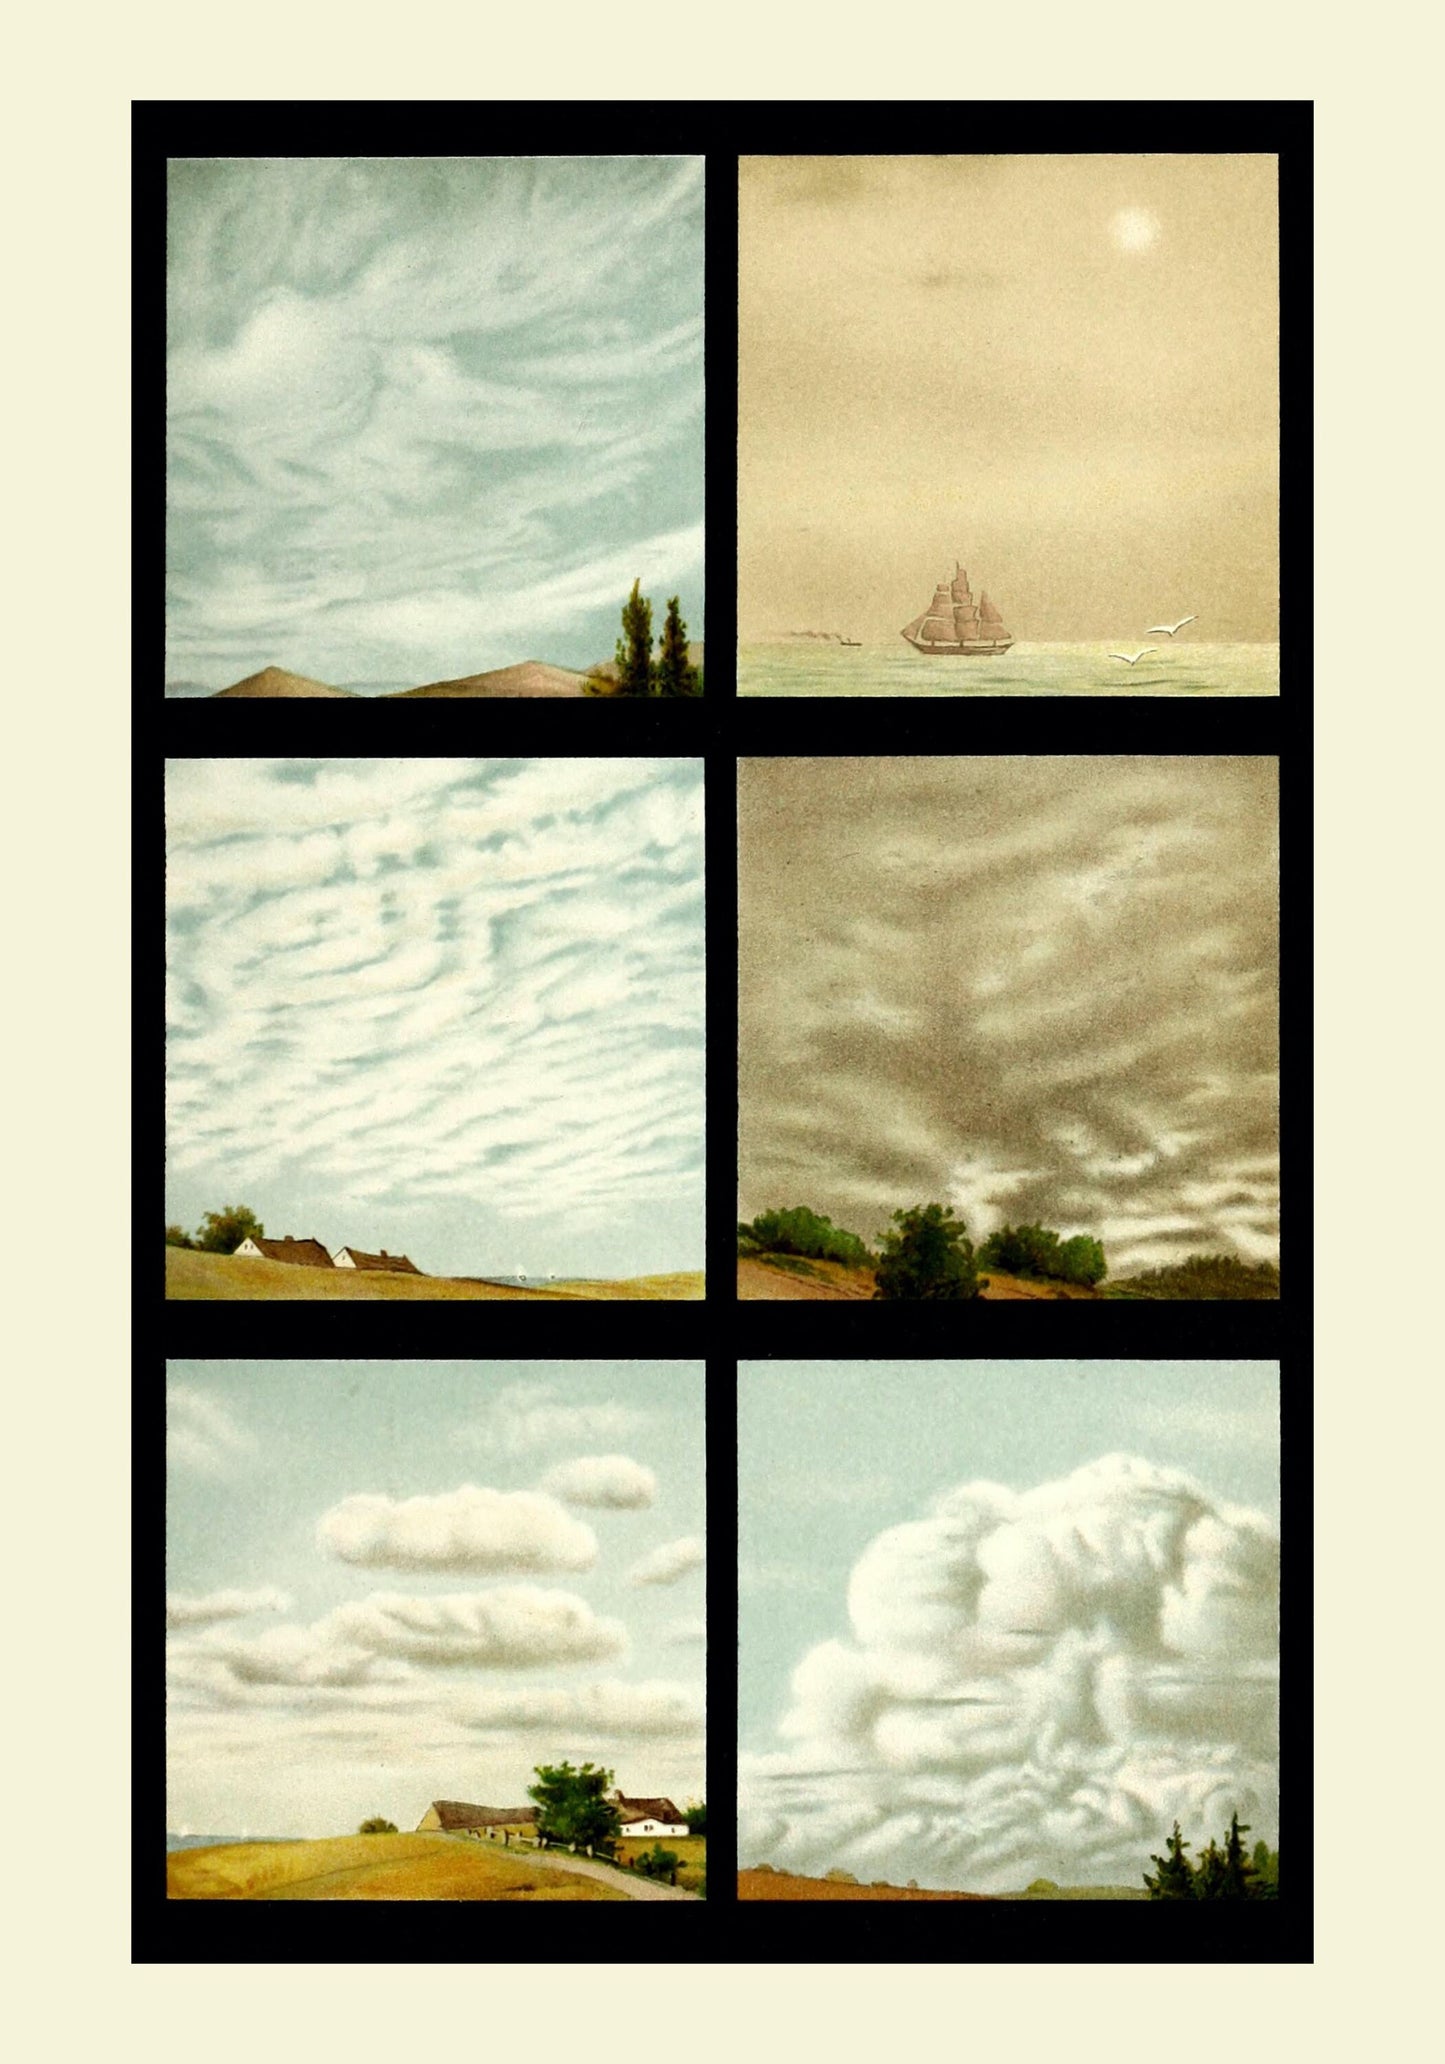 Cloud Formations Print - Antique Reproduction - Cirrus und Cirro Stratus, Alto-Stratus, Alto-Cumulus, Strato-Cumulus, Jumulus, Cumulo-Nimbus